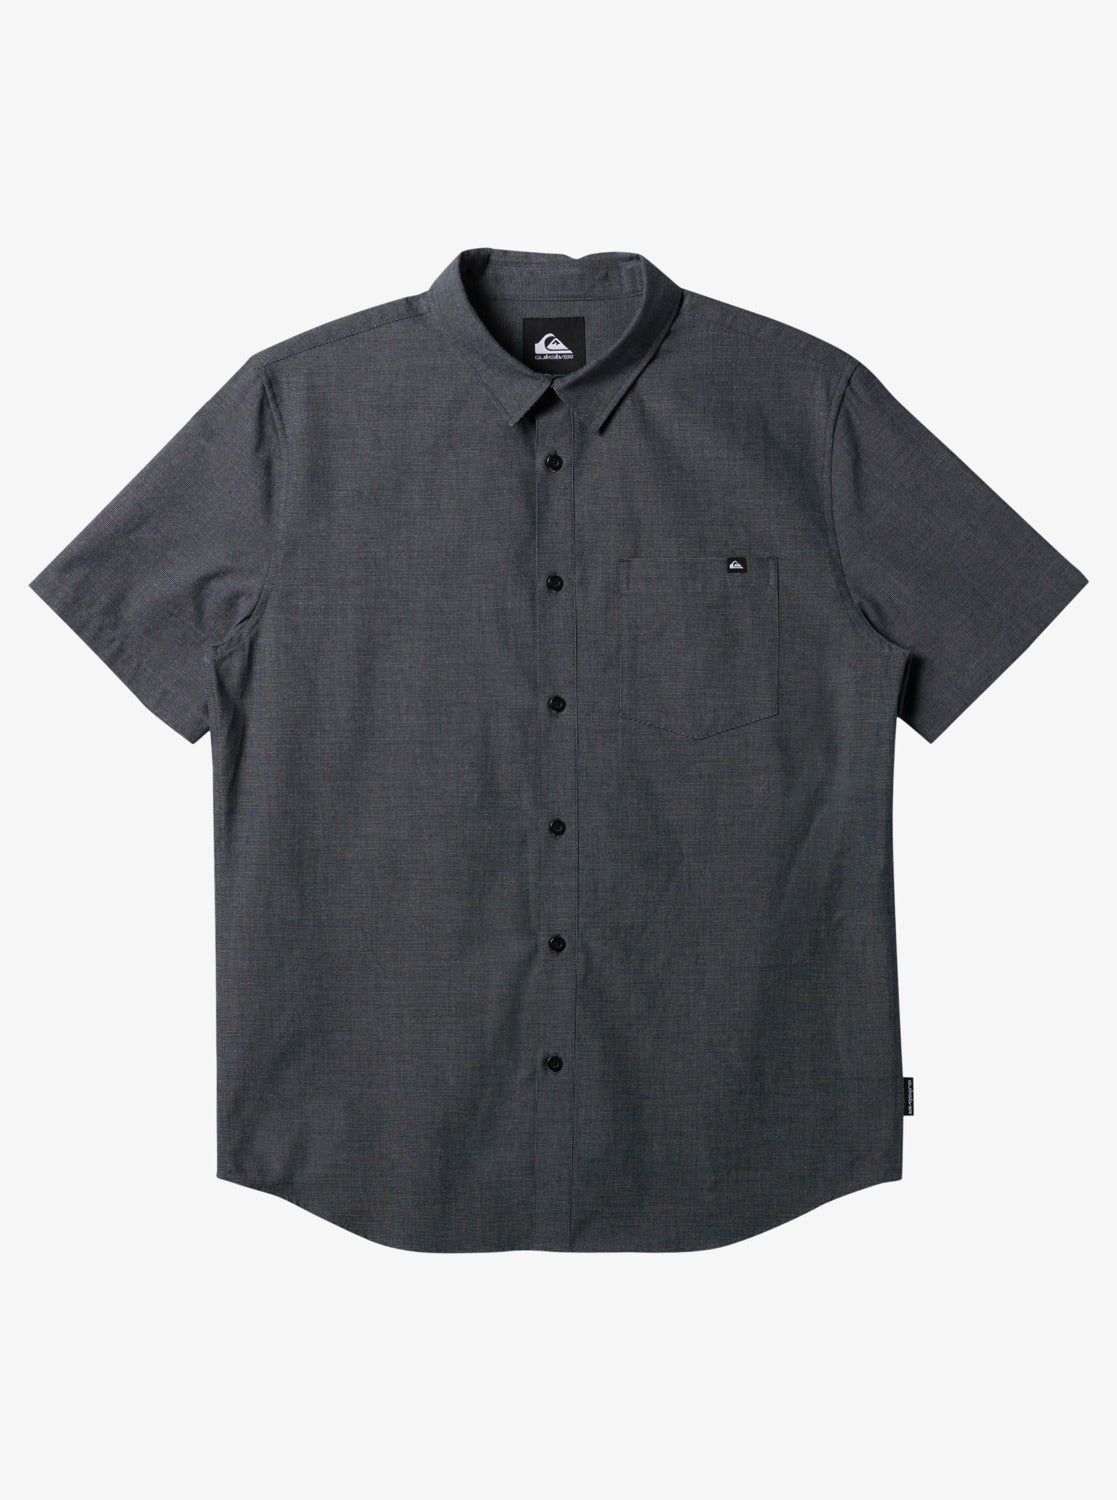 Shoreline Classic Short Sleeve Shirt - Dark Navy